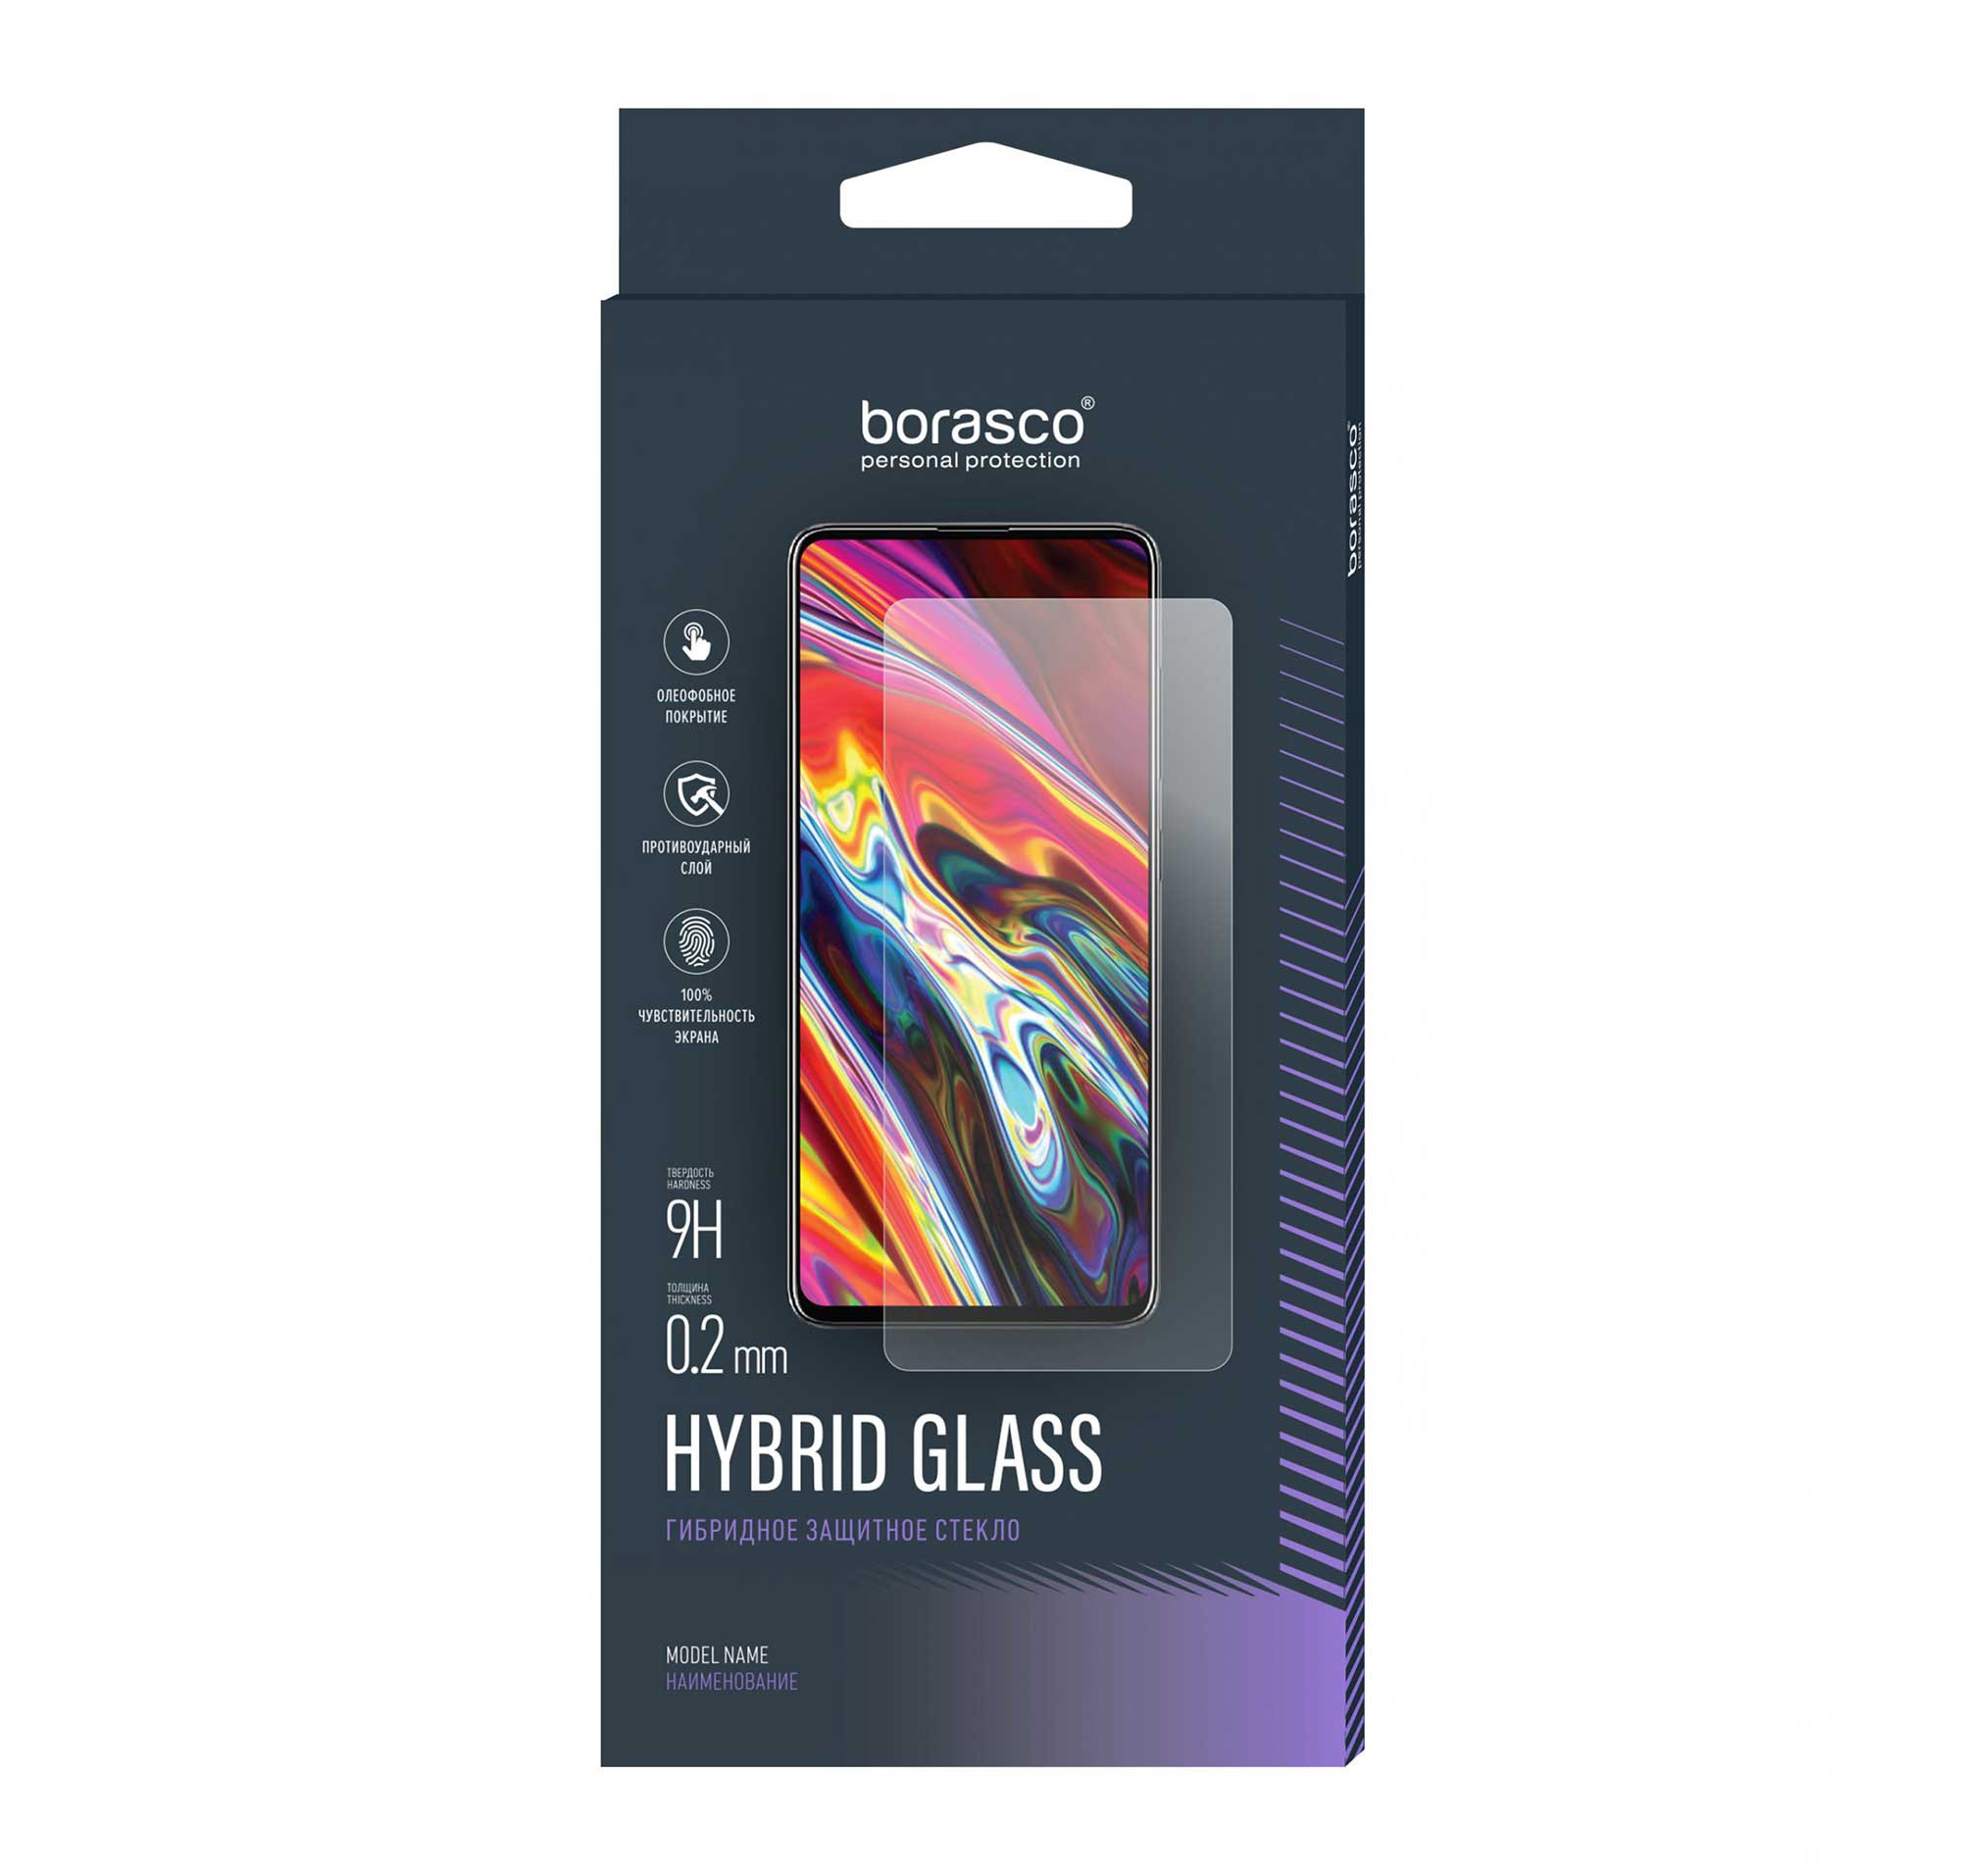 Защитное стекло BoraSCO Hybrid Glass для Sony Xperia XA1 Ultra защитное стекло для sony xperia z3 d6603 2 5d